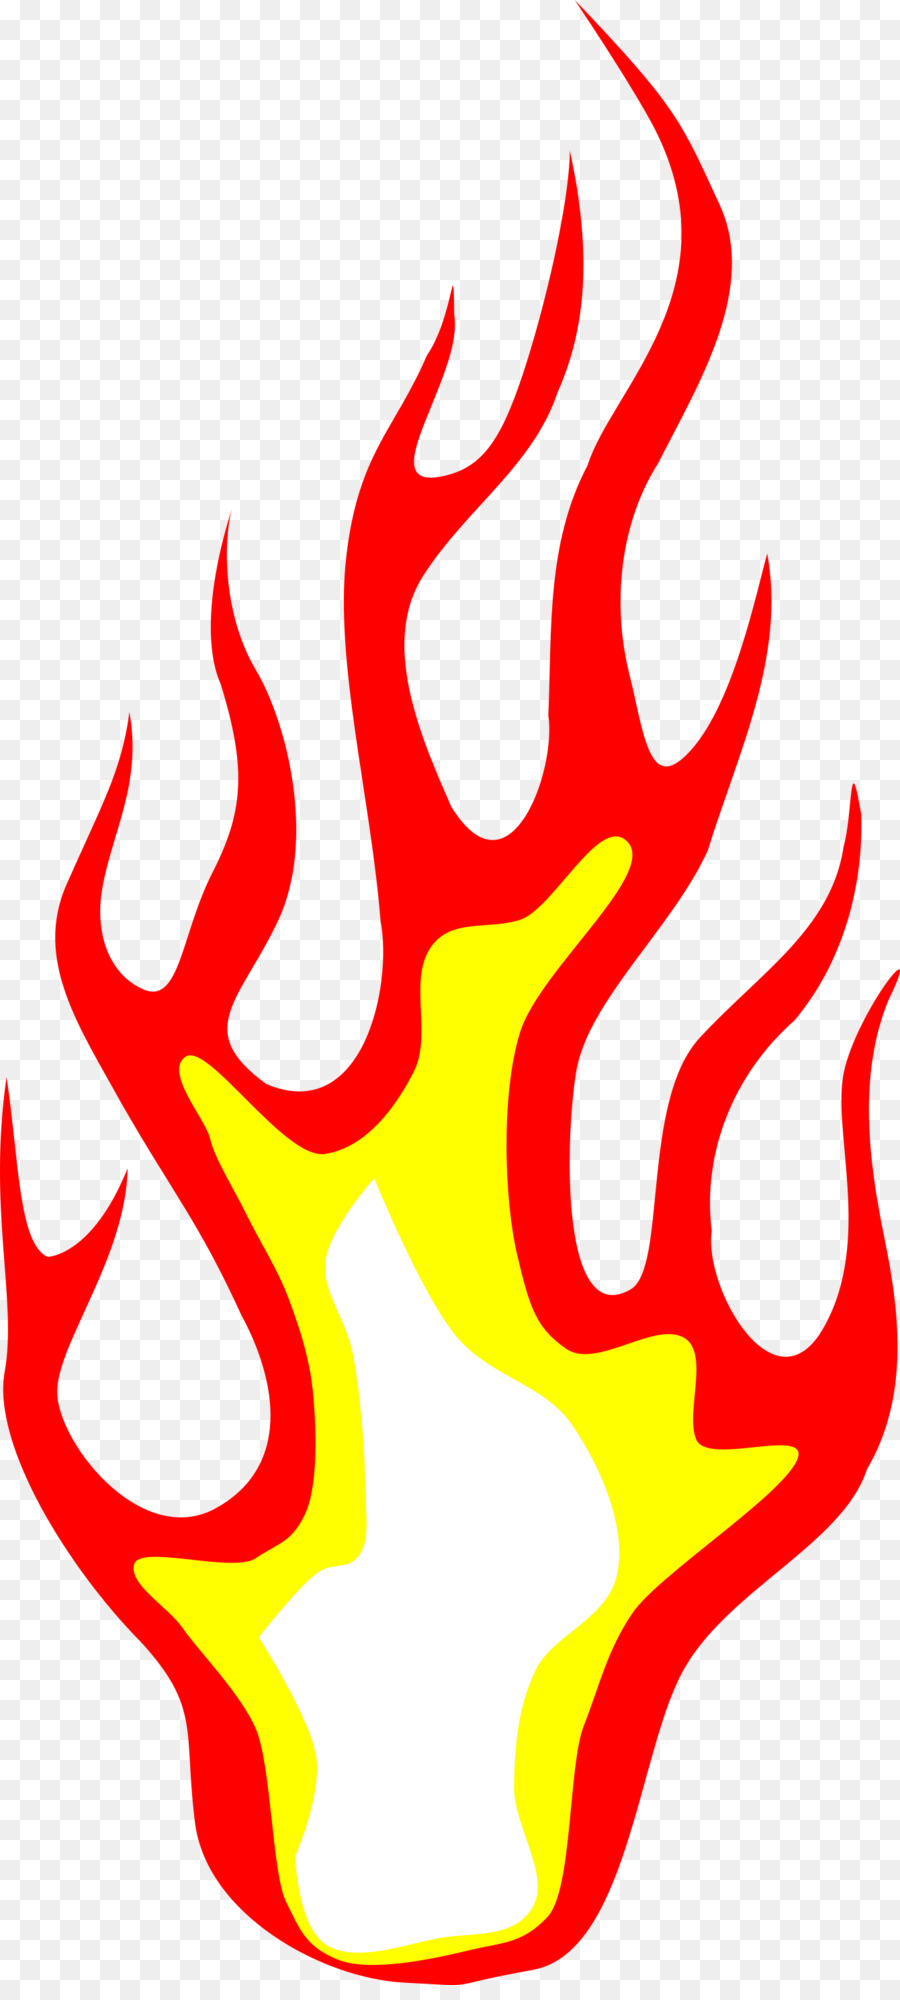 Flame Cartoon Png Download 1340 2955 Free Transparent Flame